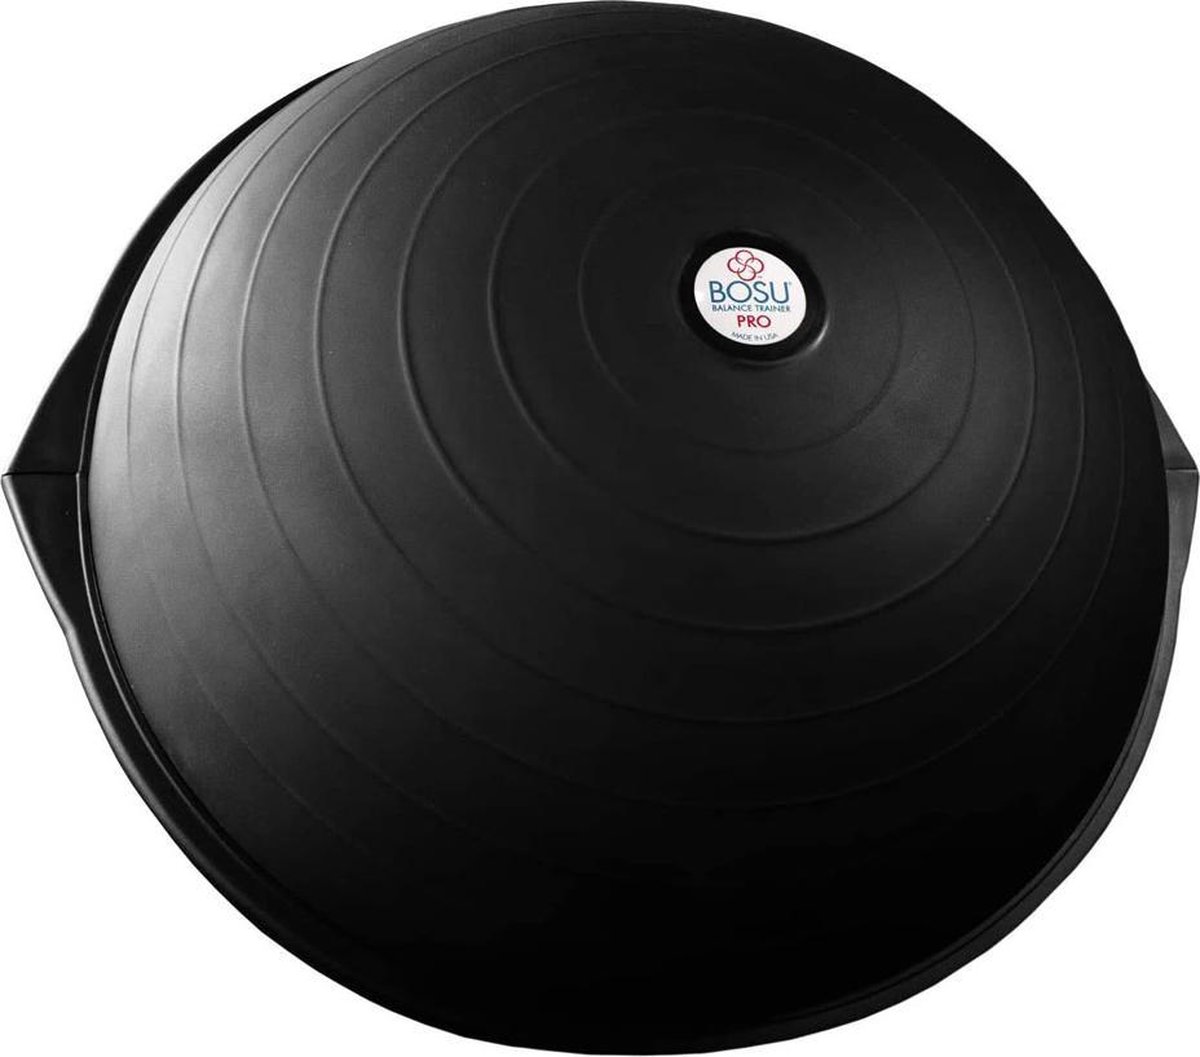 Bosu balance trainer PRO edition - Limited Black Edition  350010